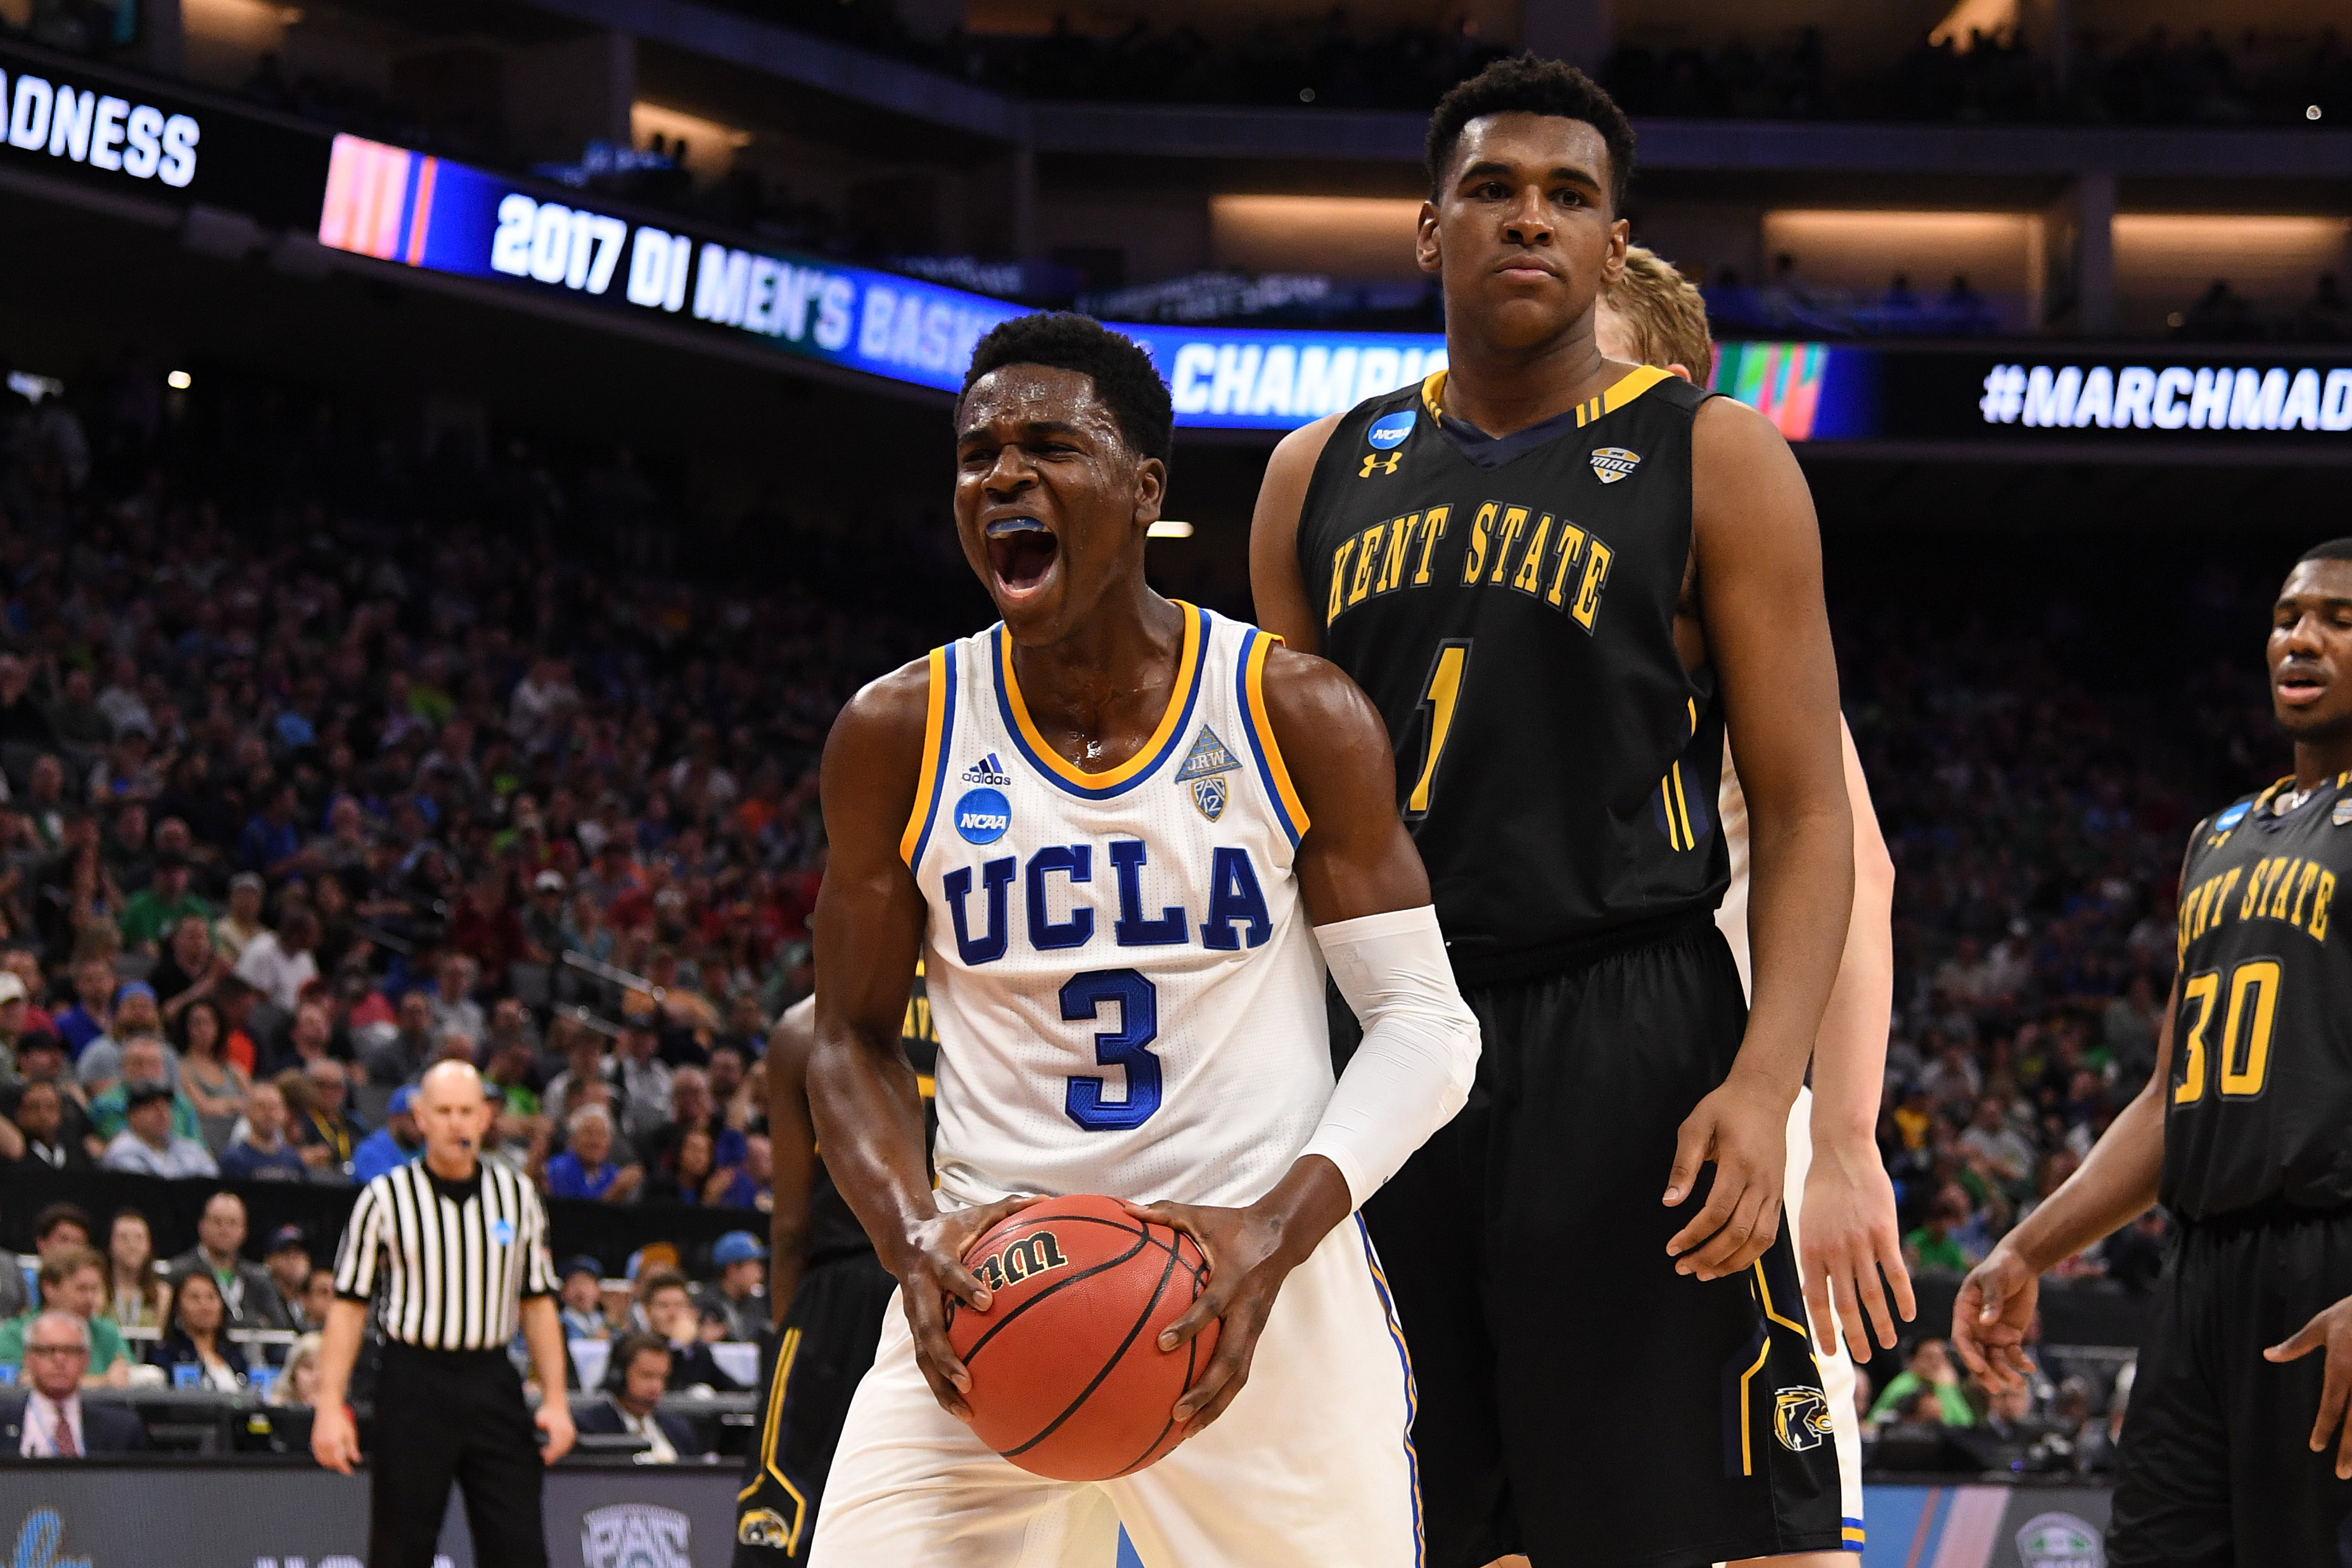 NCAA Tournament UCLA Basketball vs. Cincinnati Preview, TV, Radio